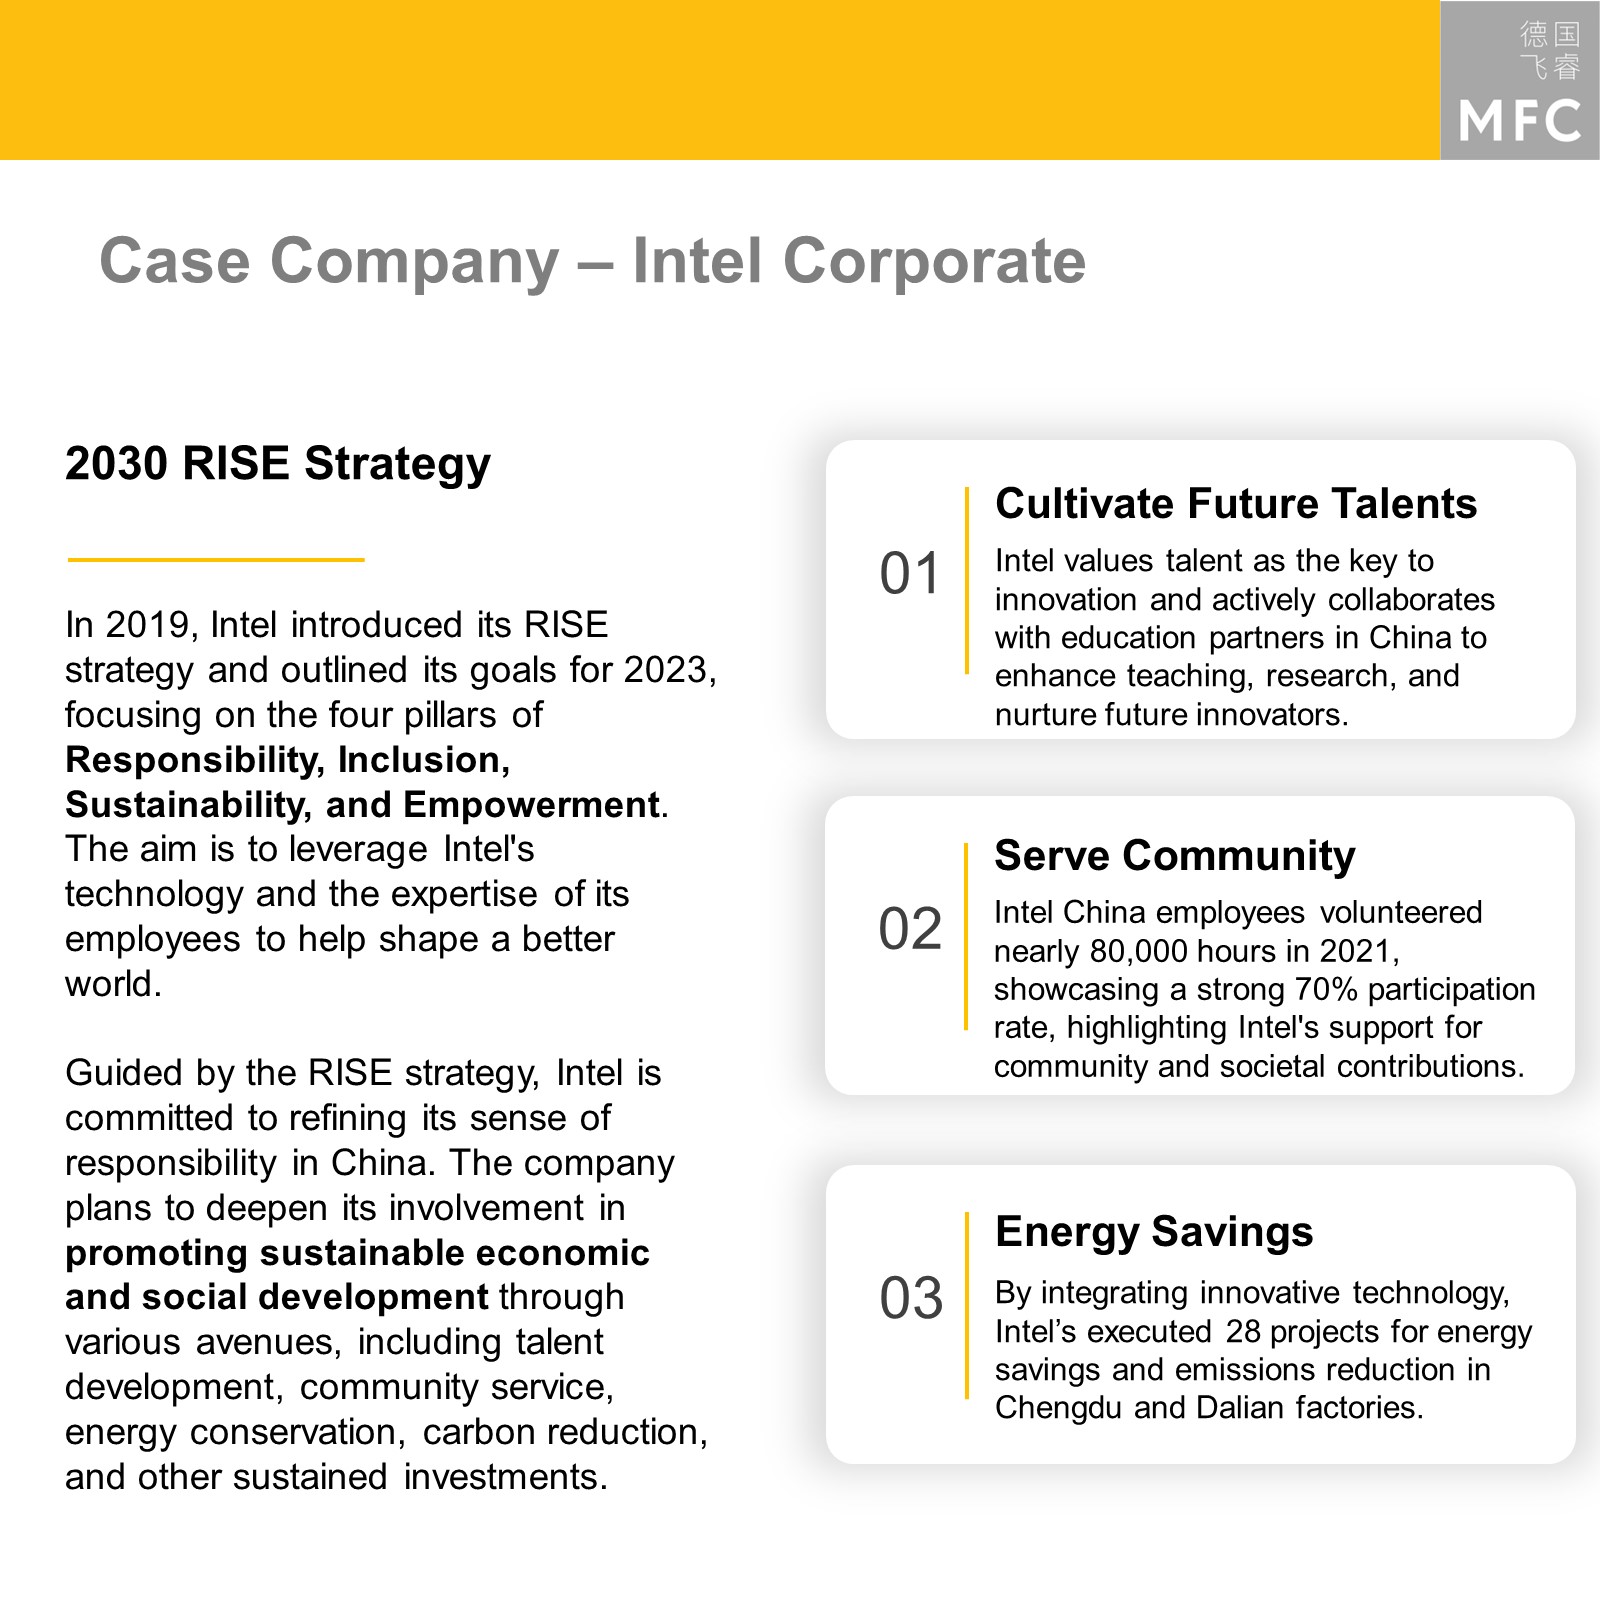 CSR Intel Corporate: Case Study